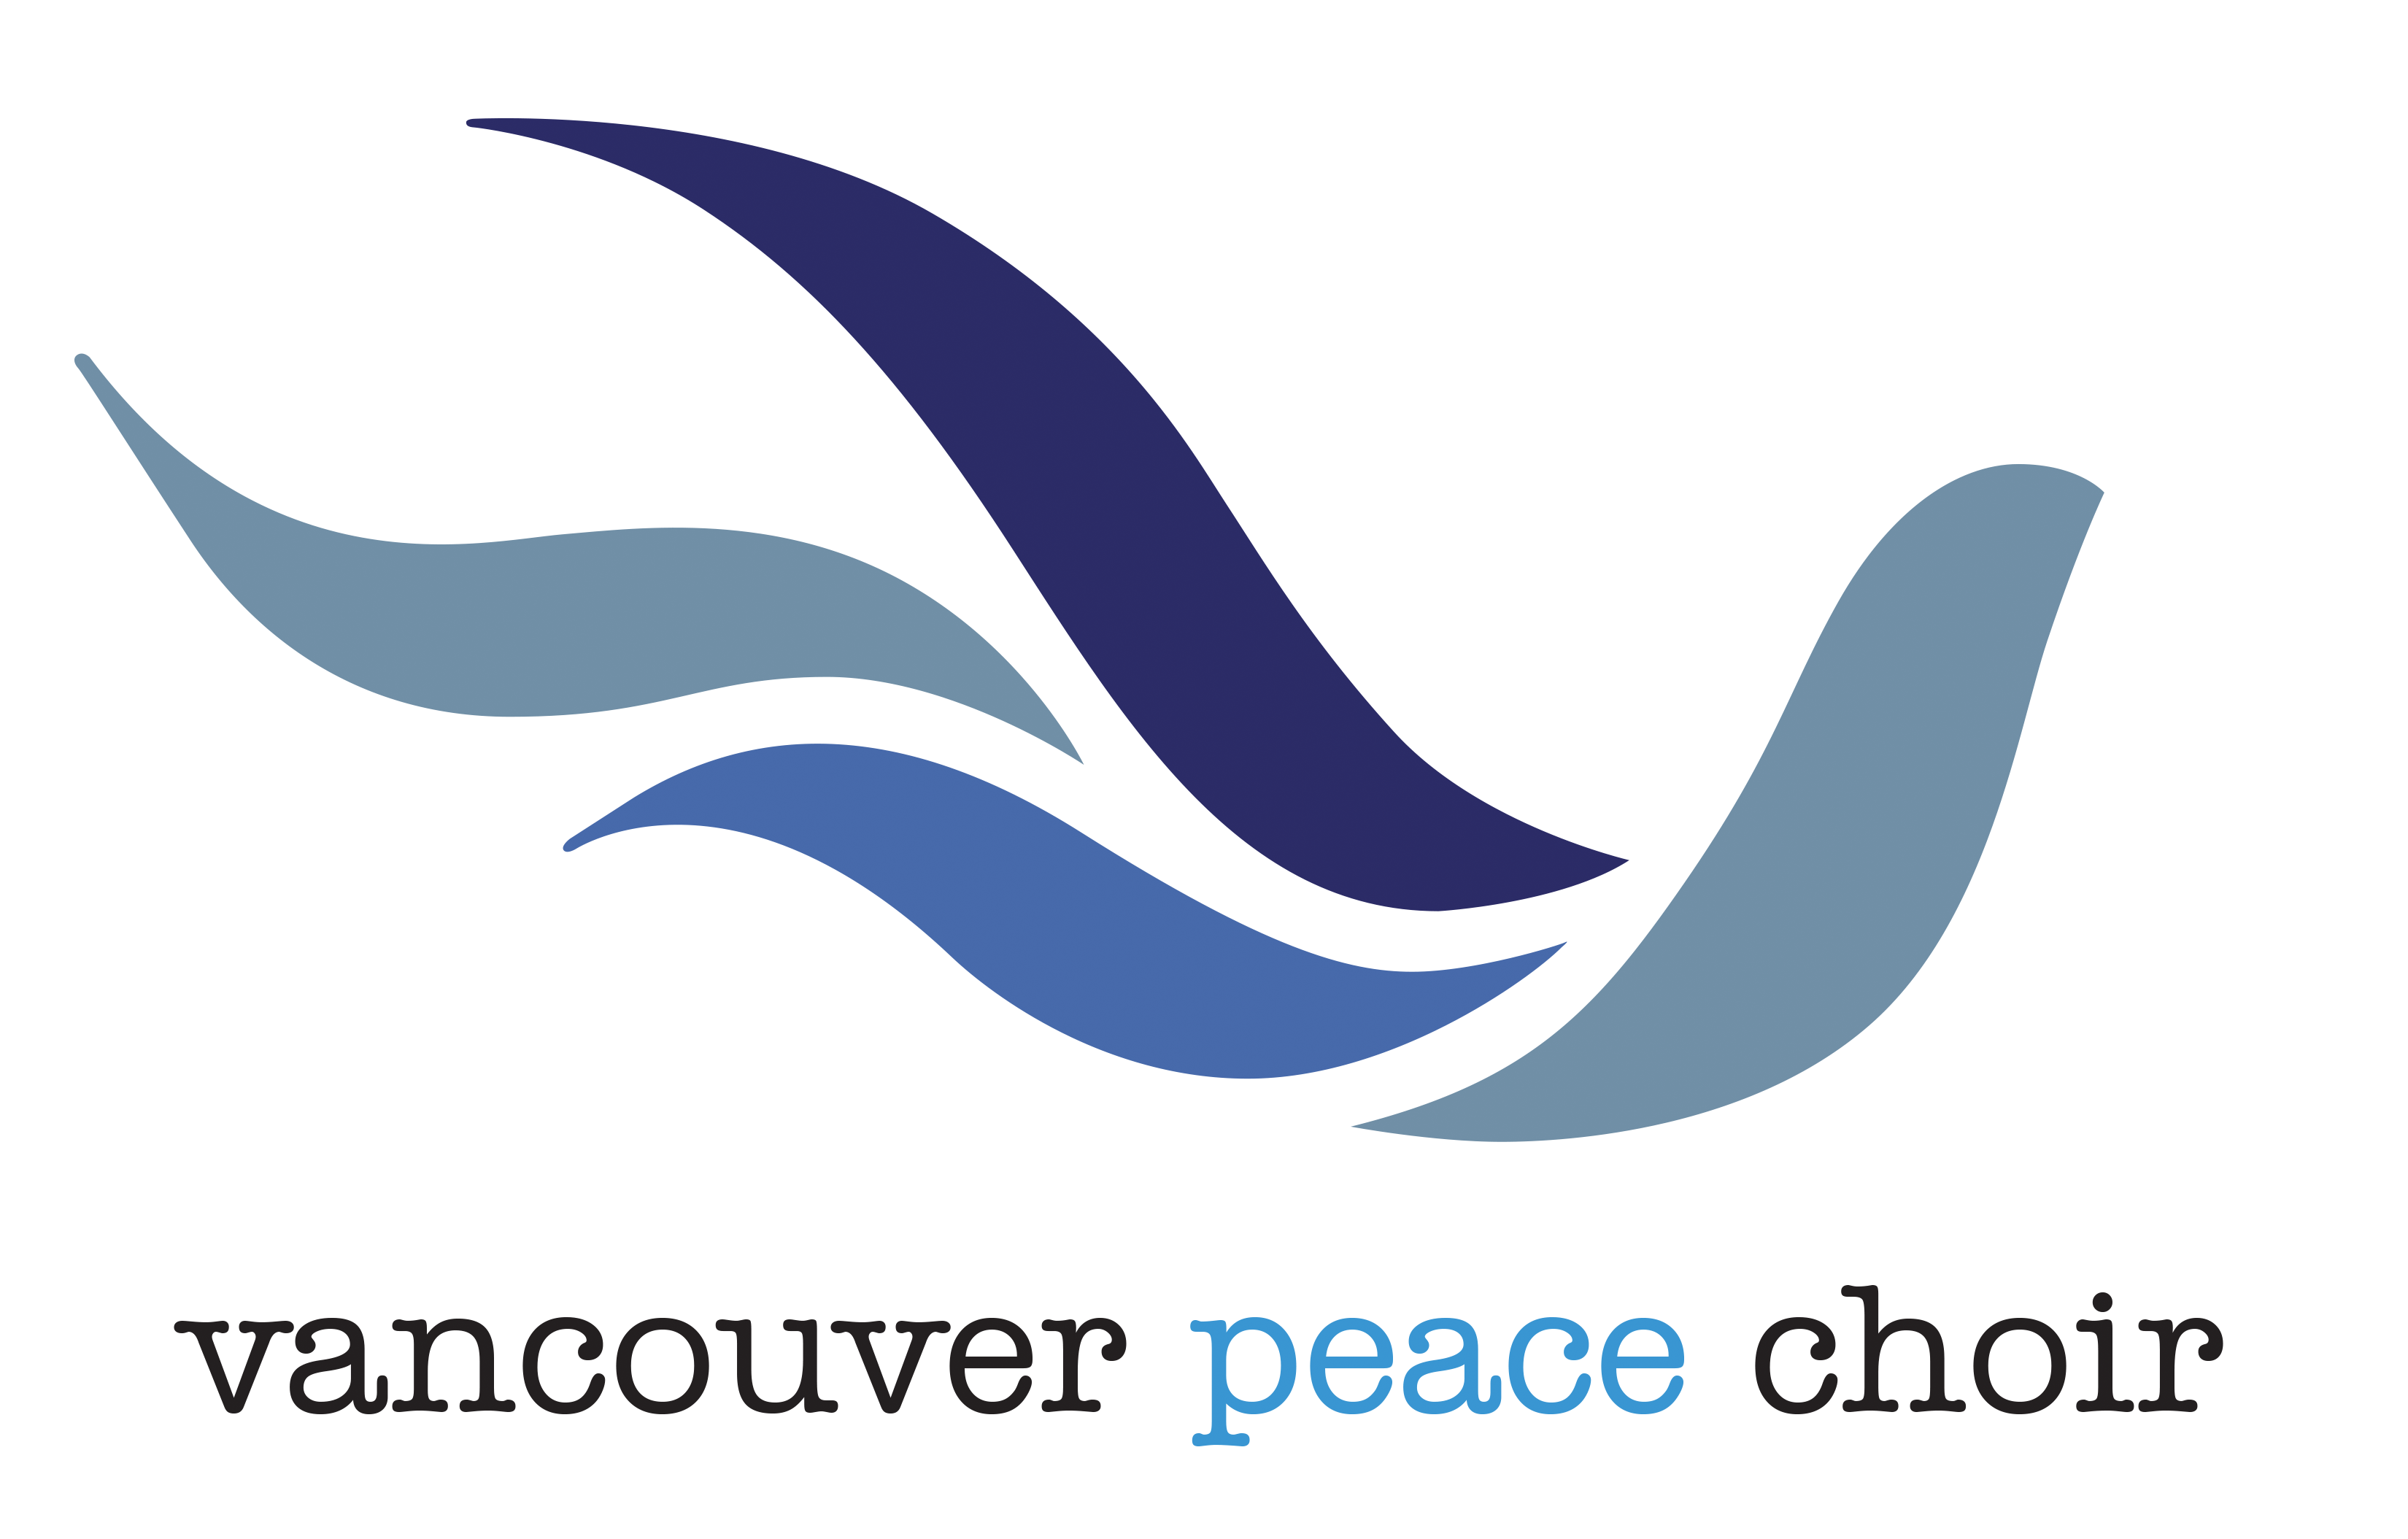 The Vancouver Peace Choir